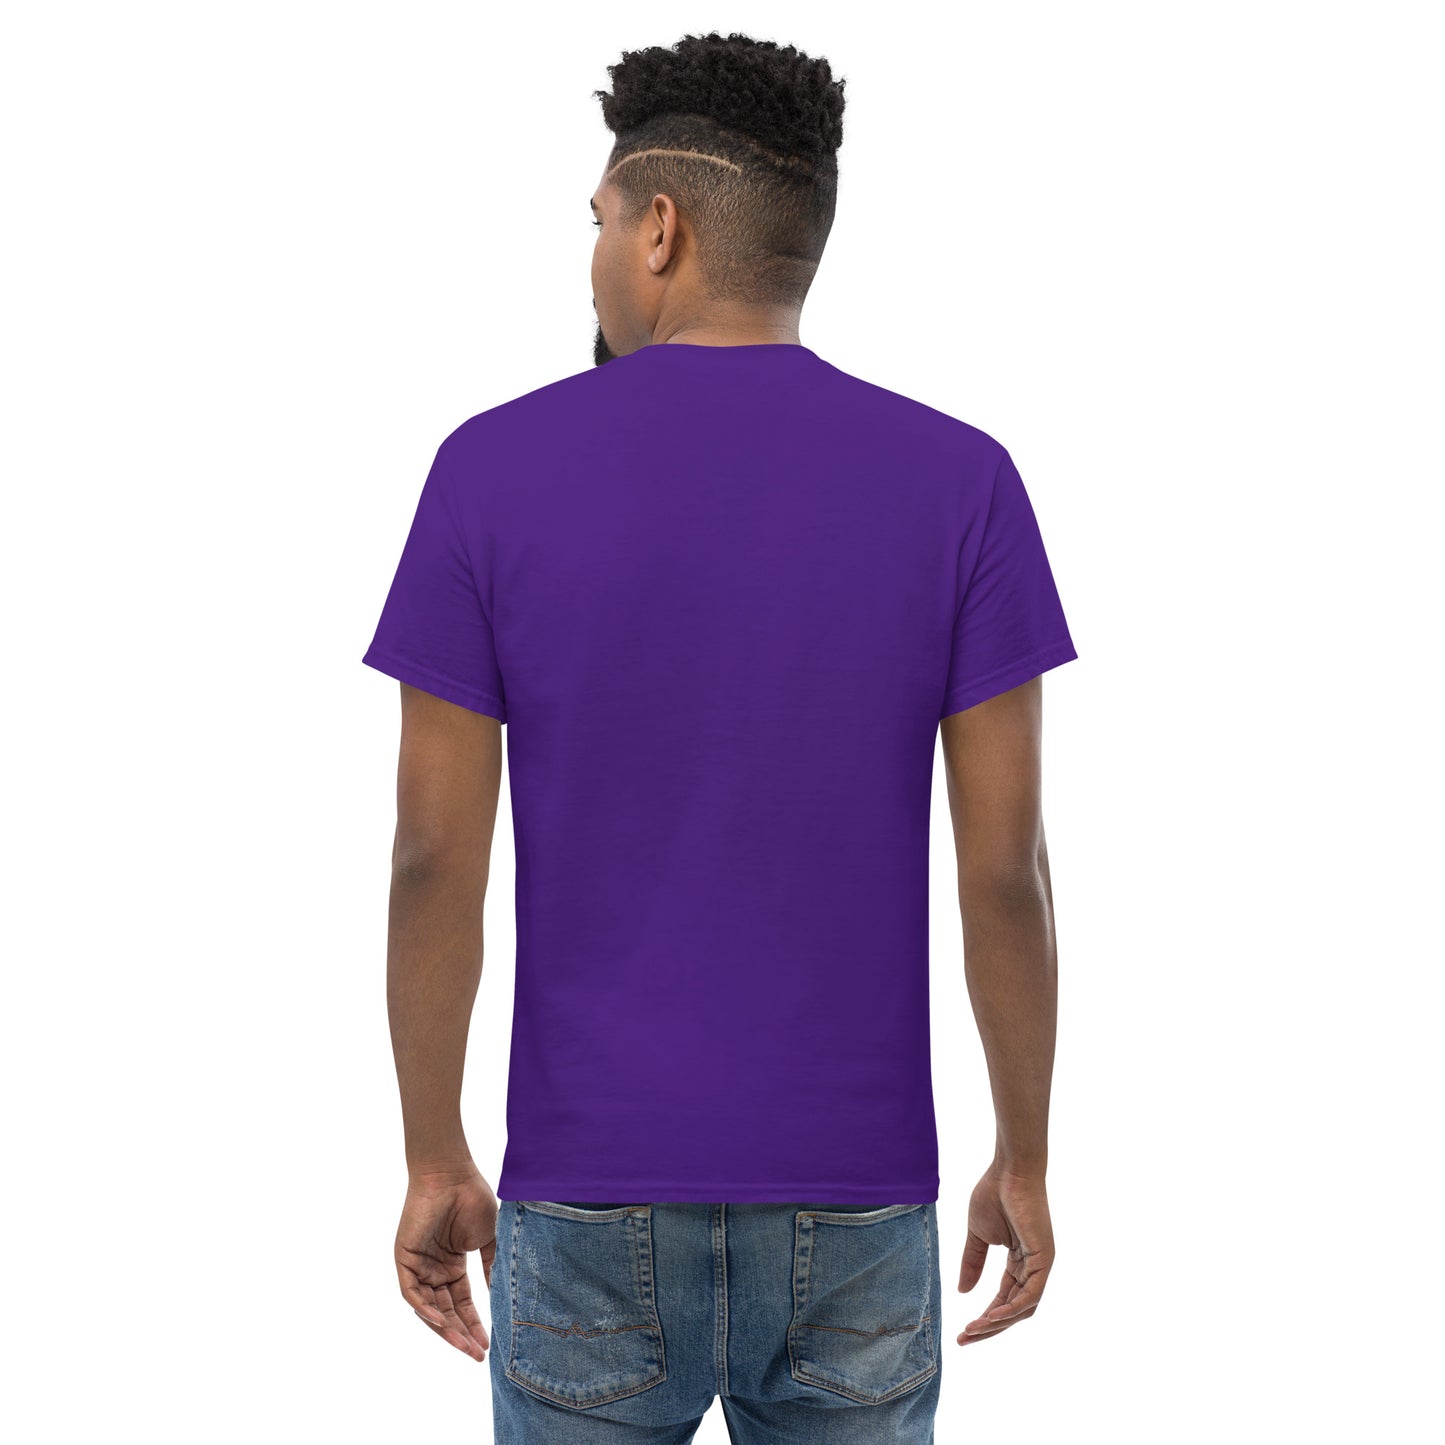 Boxed Smile Tee in Purple - Short Sleeve